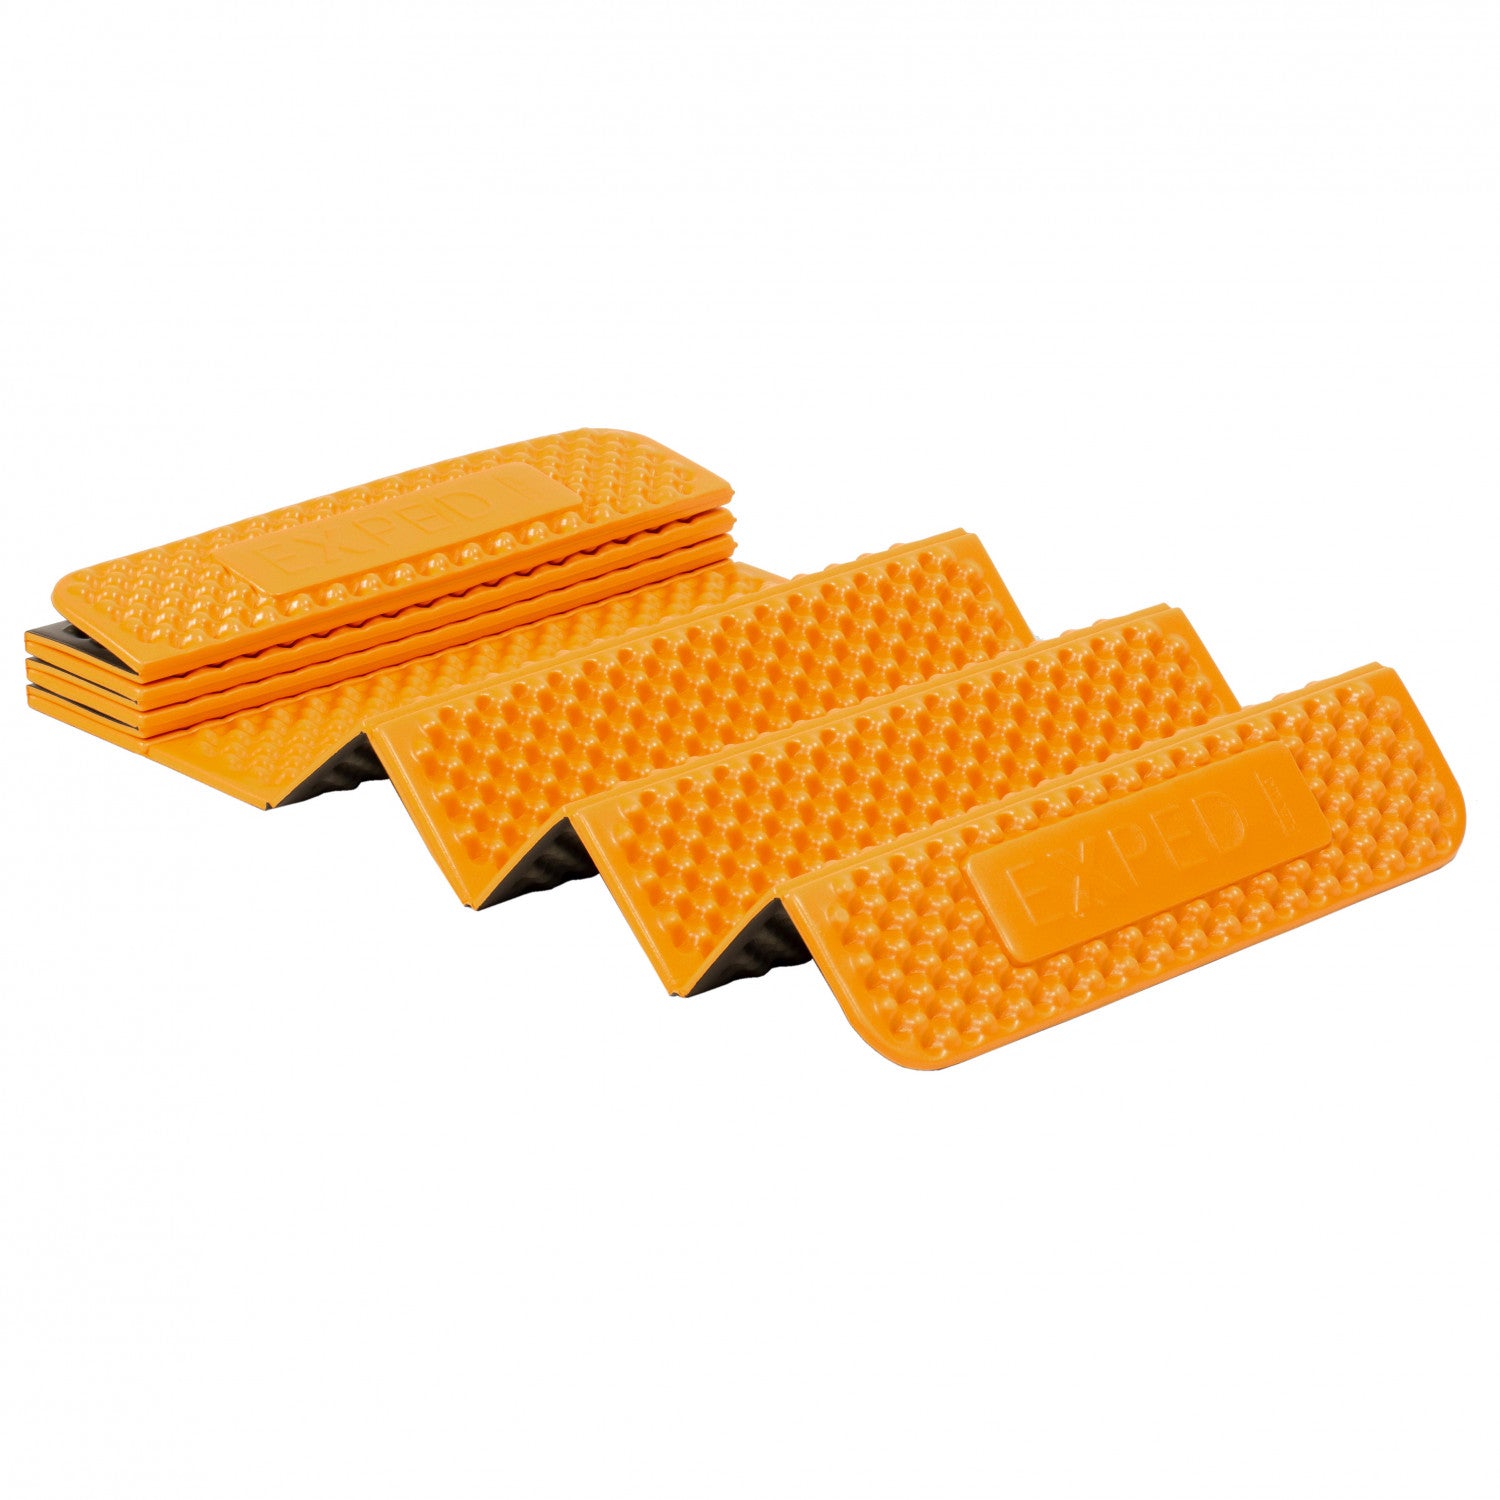 Exped FlexMat folding sleeping mat in orange colour